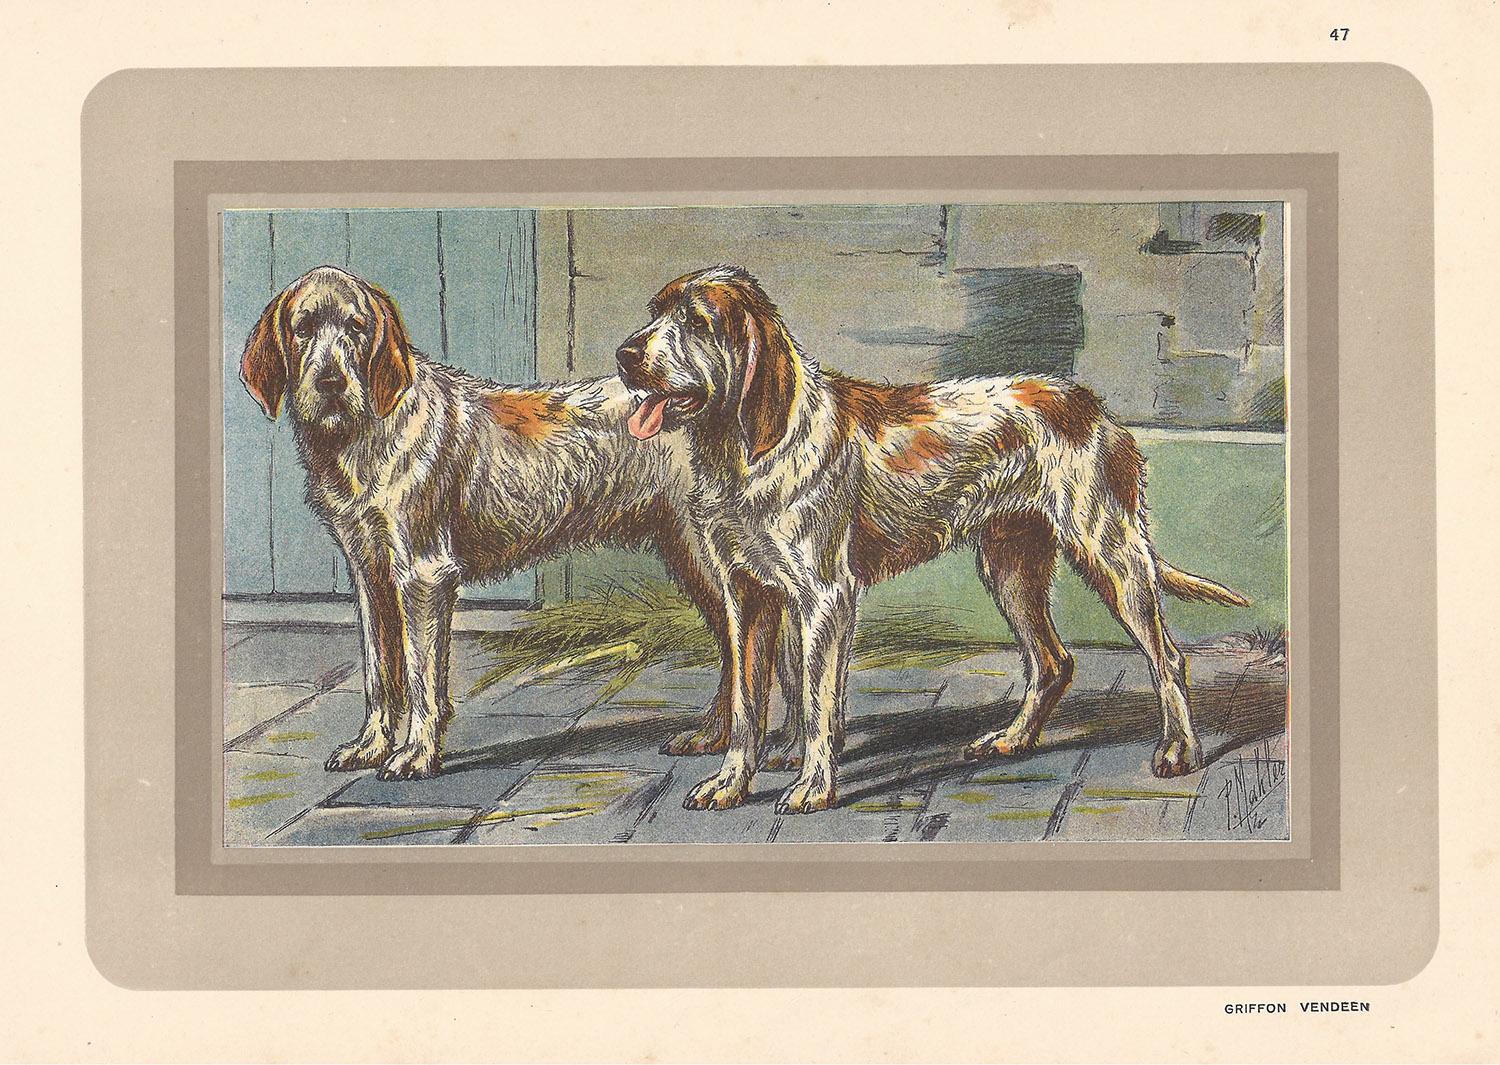 Animal Print P. Mahler - Griffon Vendeens, chien chromolithographe franais, annes 1930